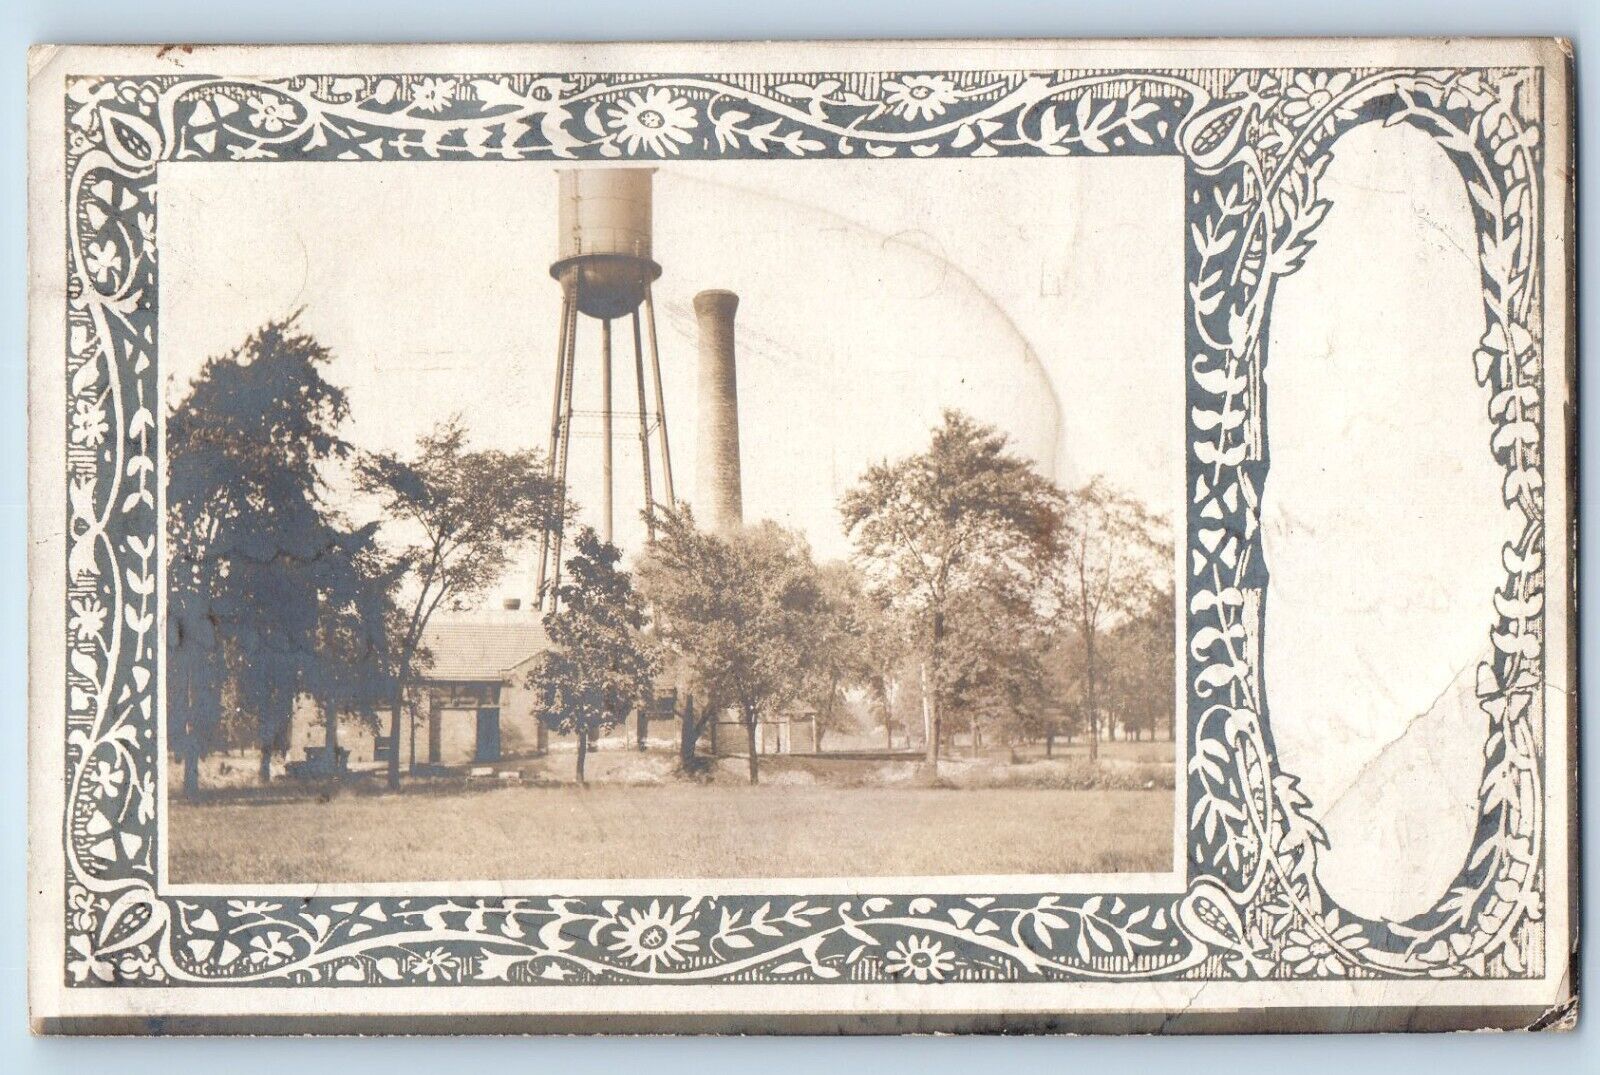 Yocemento Kansas KS Postcard RPPC Photo Water Tower And Trees c1910's Antique